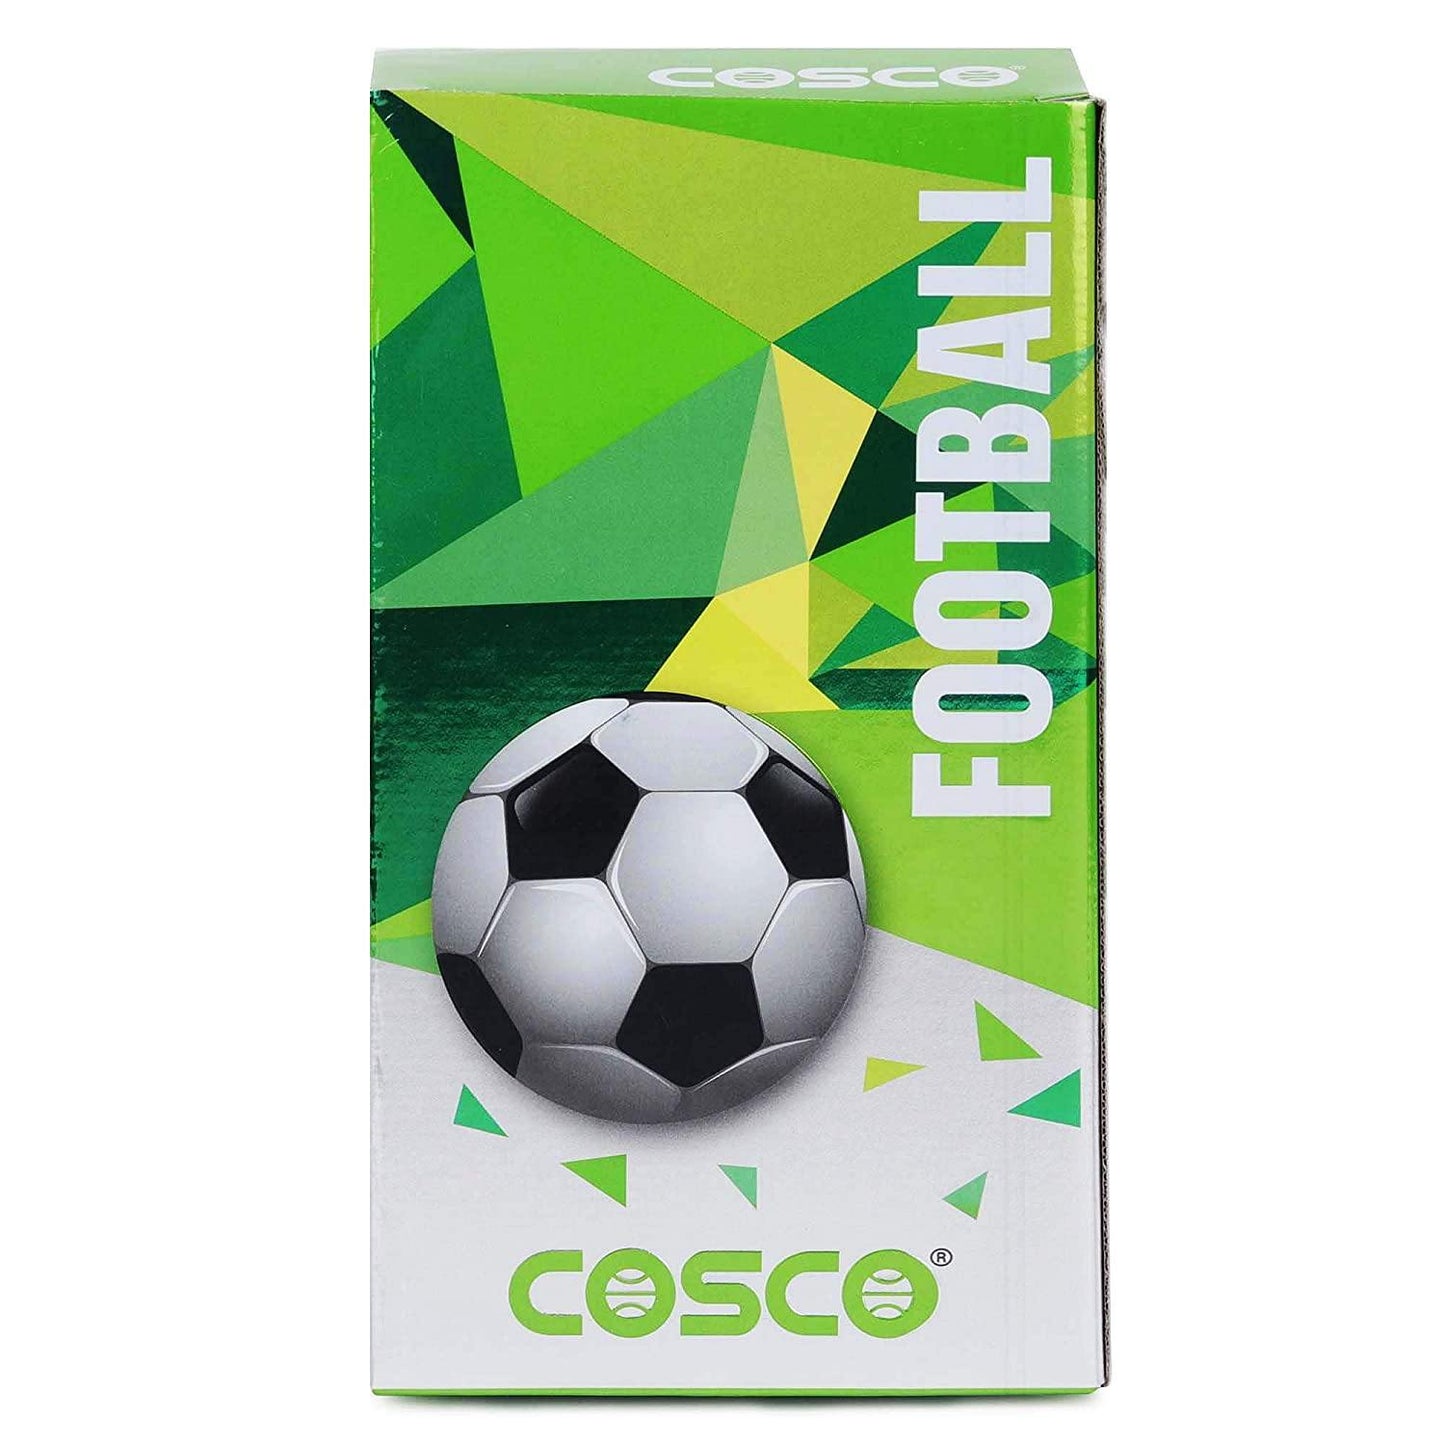 Cosco 14013 Mundial Foot Ball, Size 5 (White/Black) - Best Price online Prokicksports.com